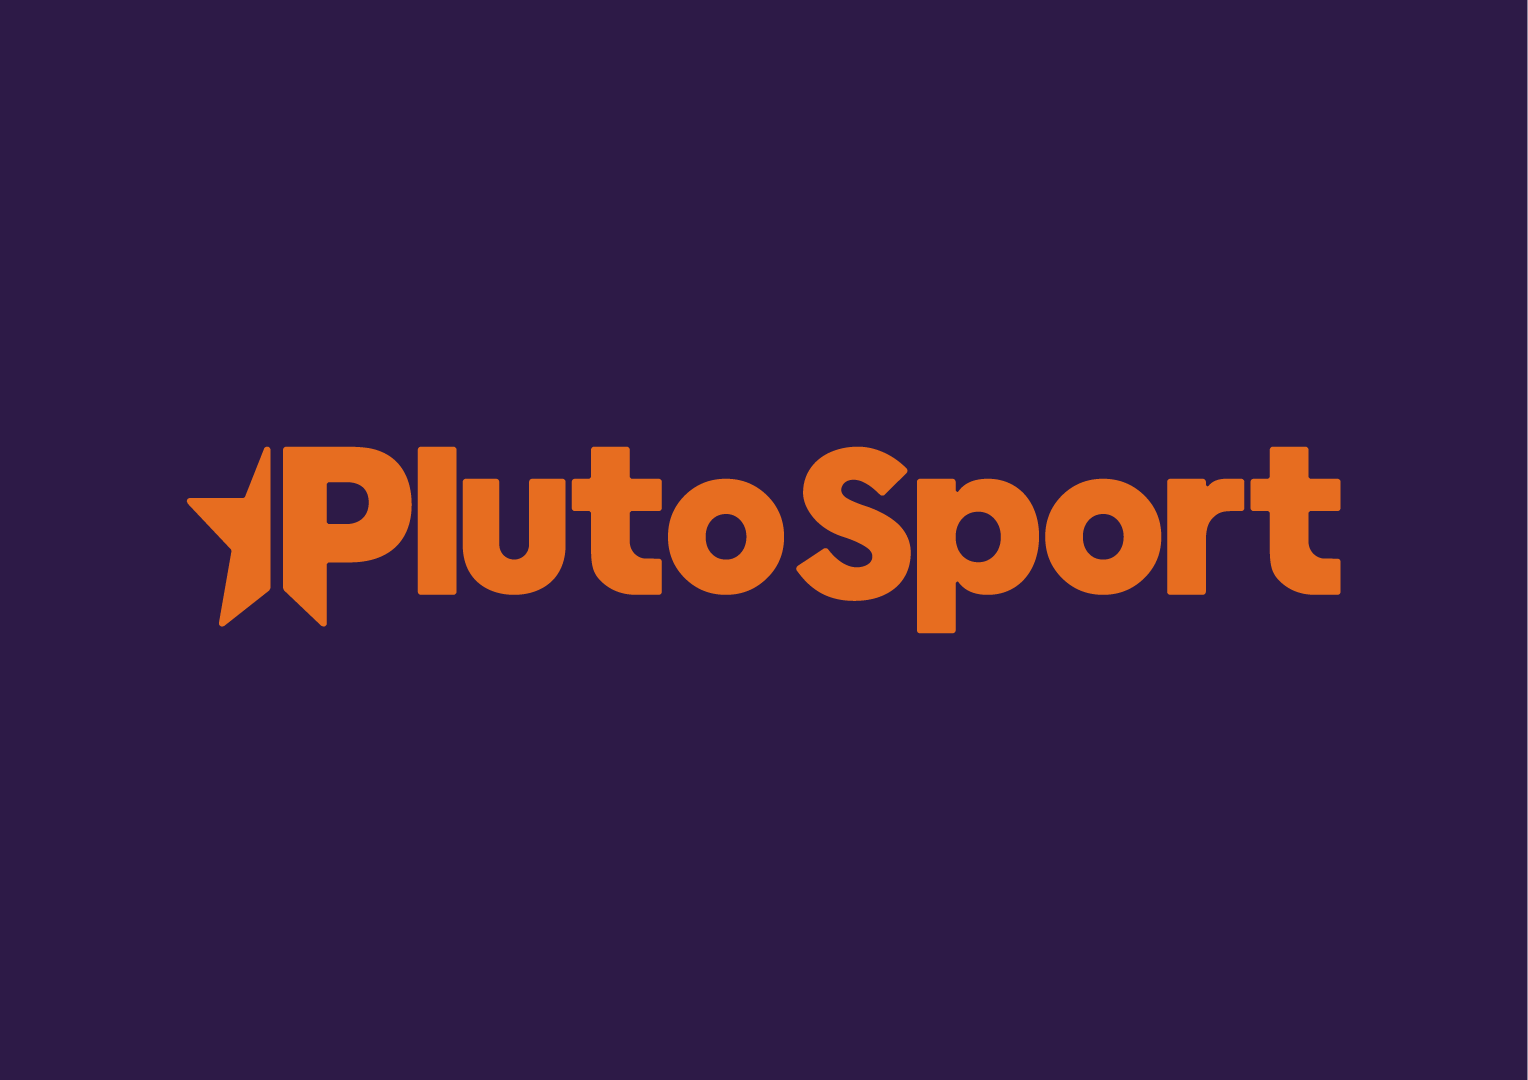 Plutosport